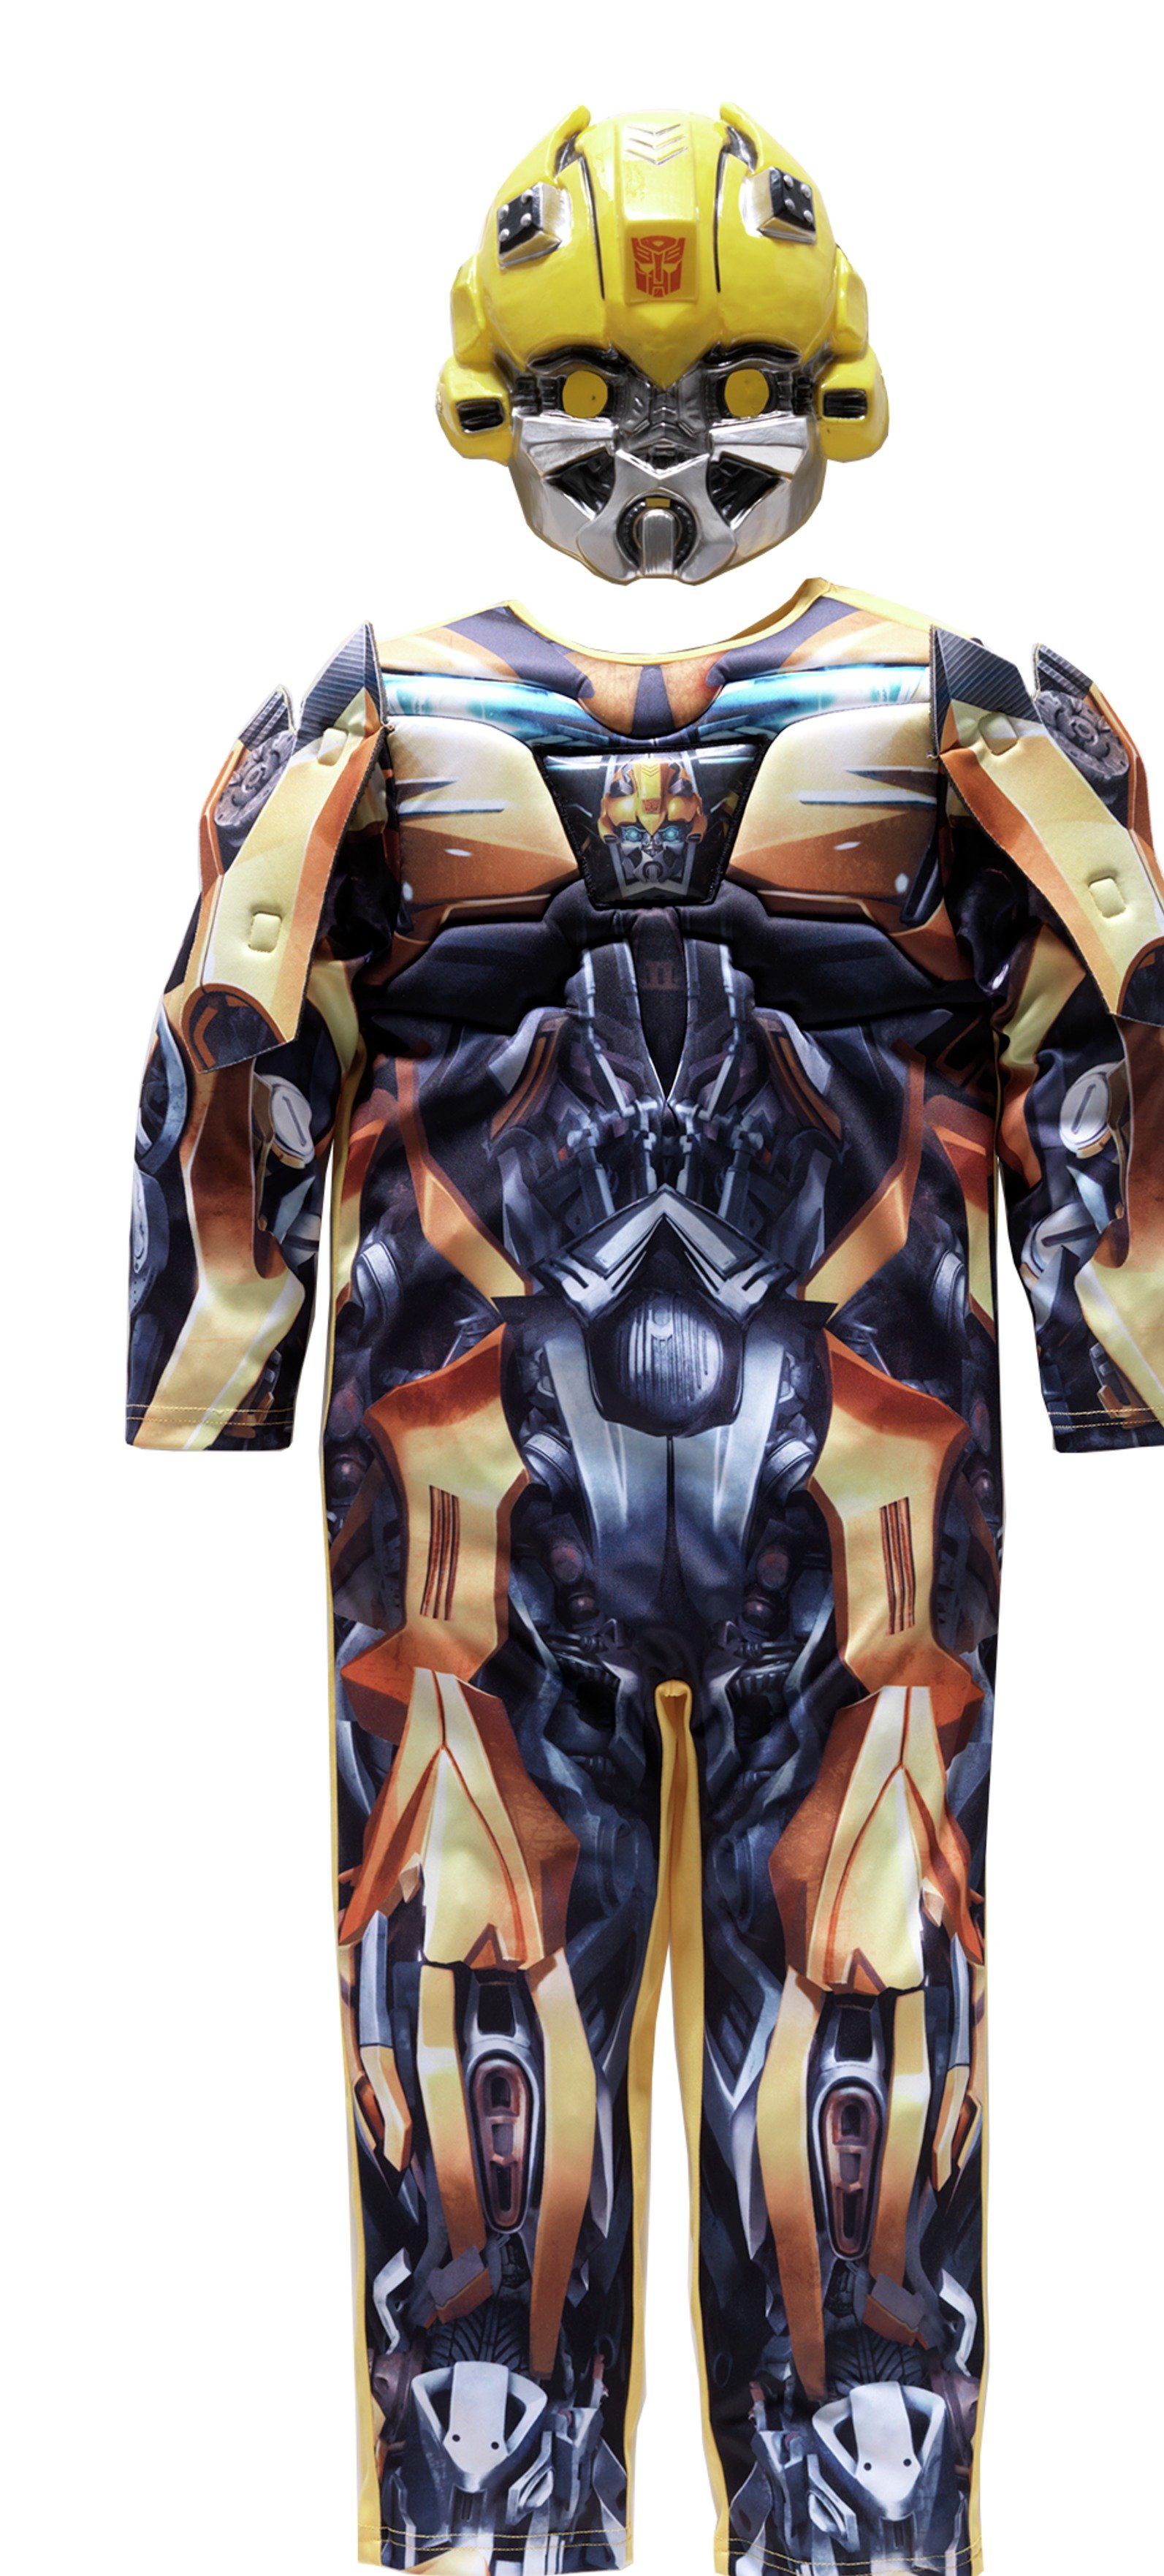 Transformers Fancy Dress Costume - 7-8 Years